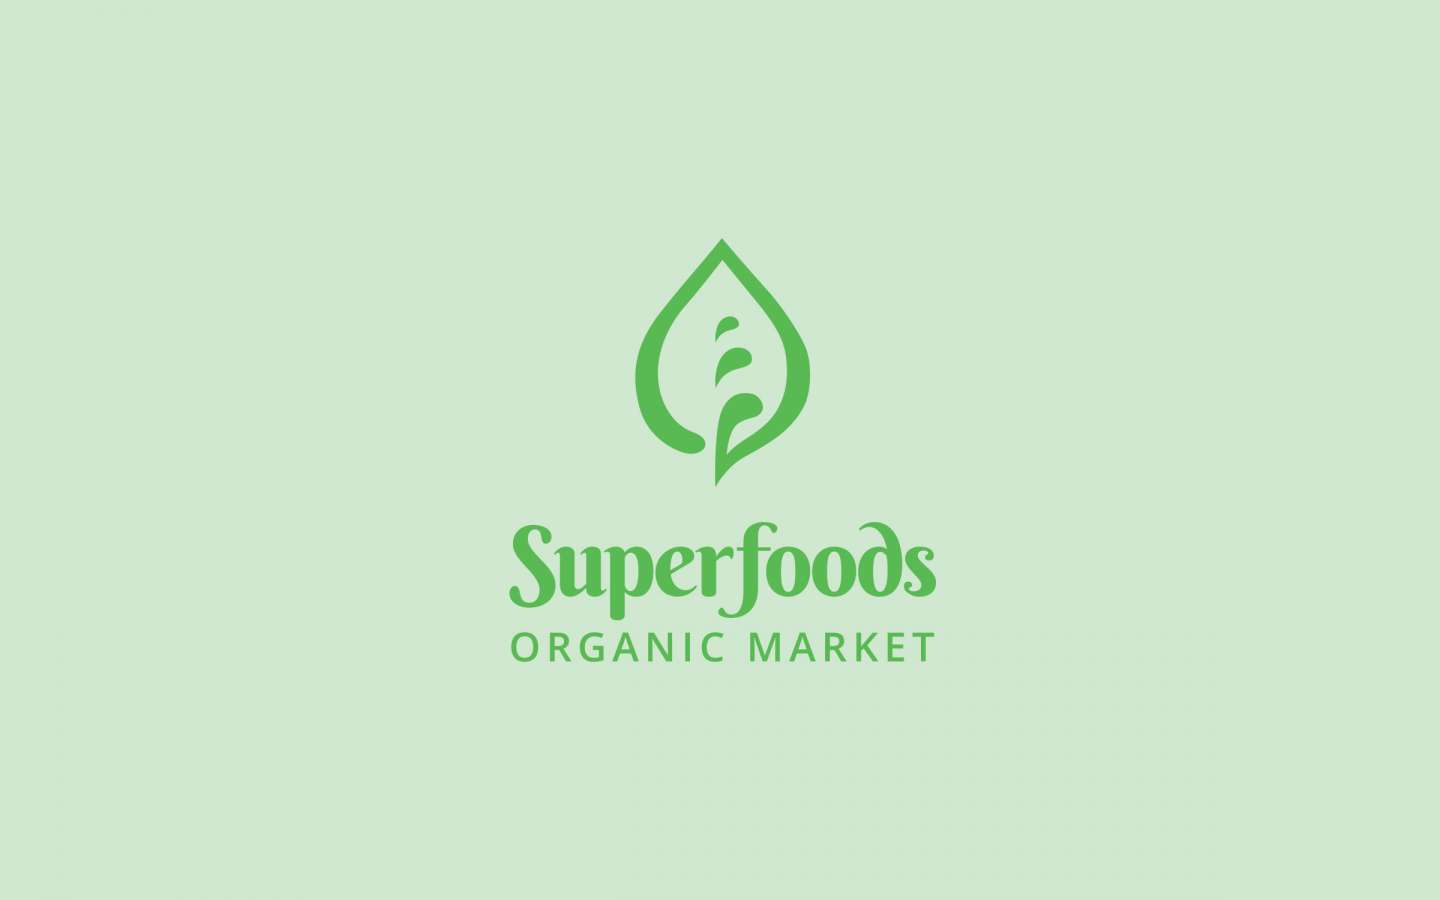 Superfoods ORGANIC MARKET